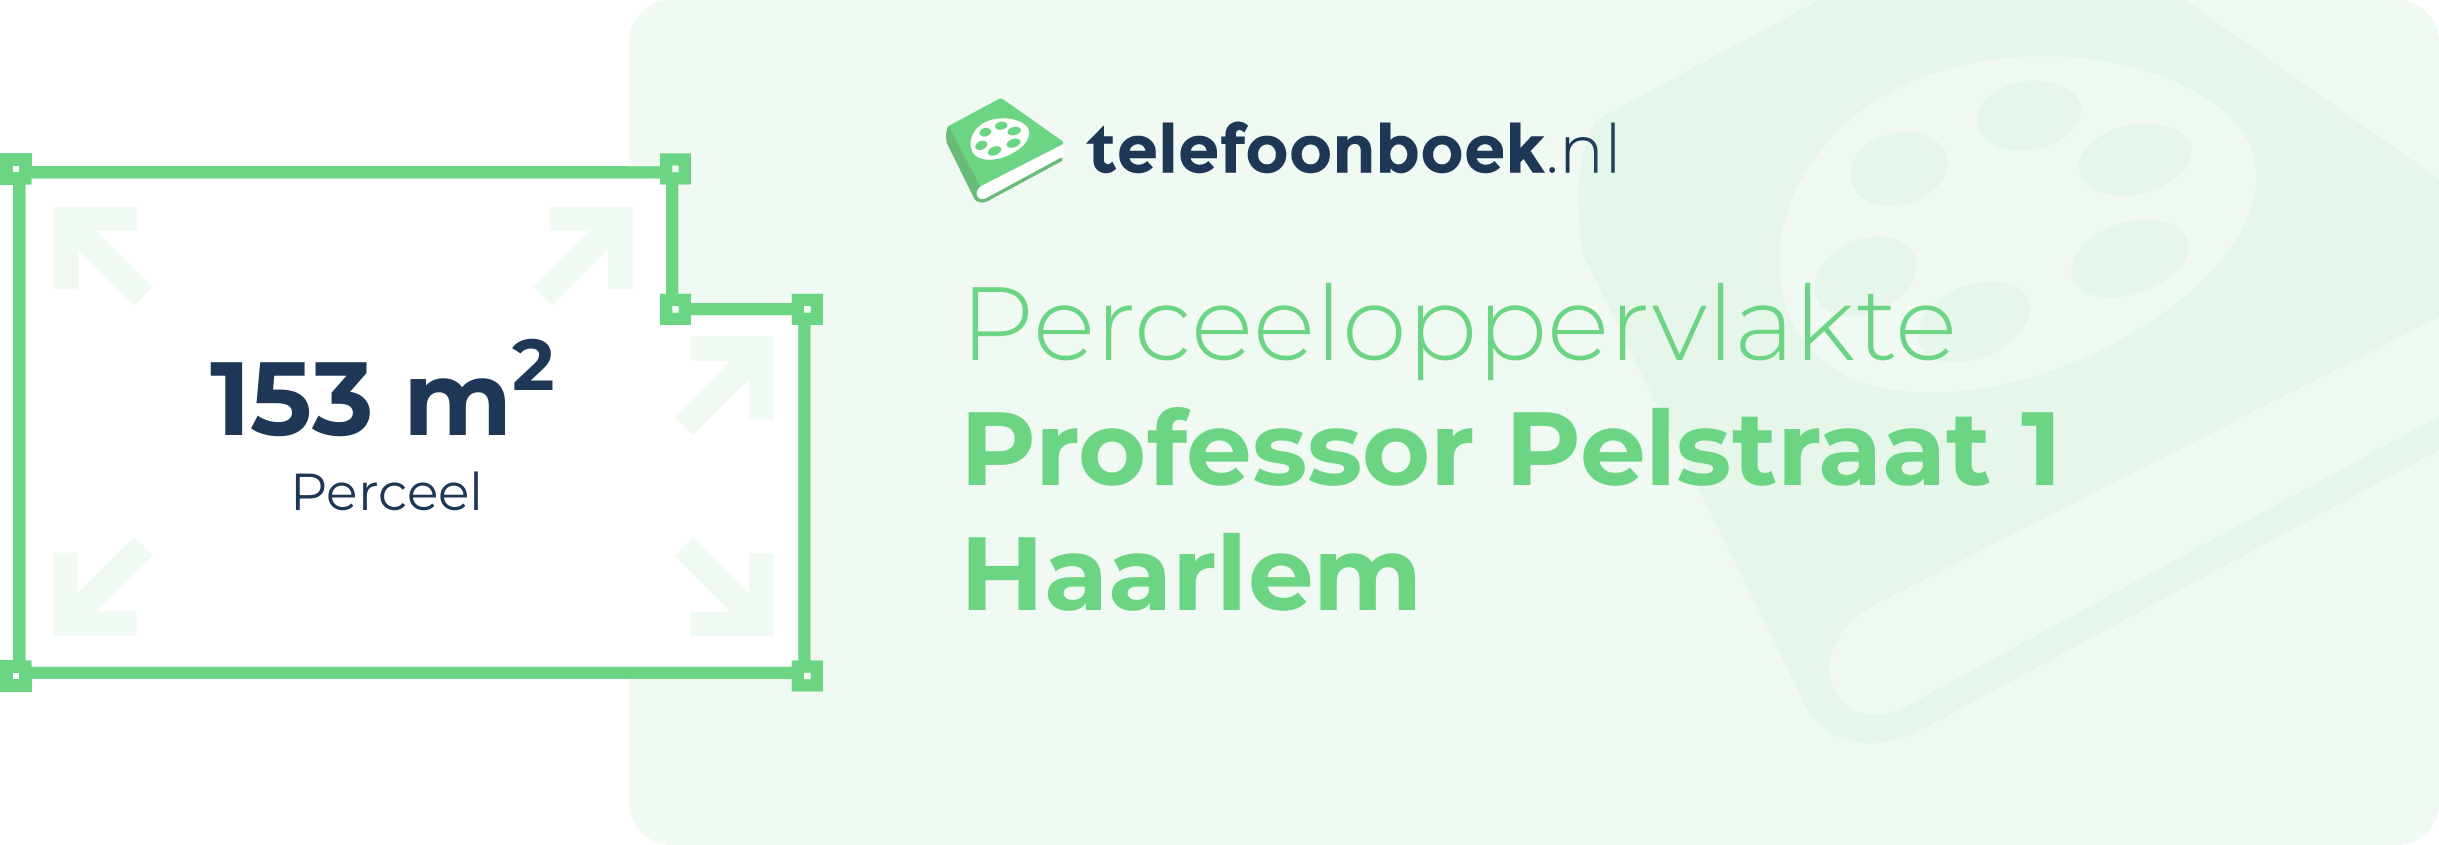 Perceeloppervlakte Professor Pelstraat 1 Haarlem